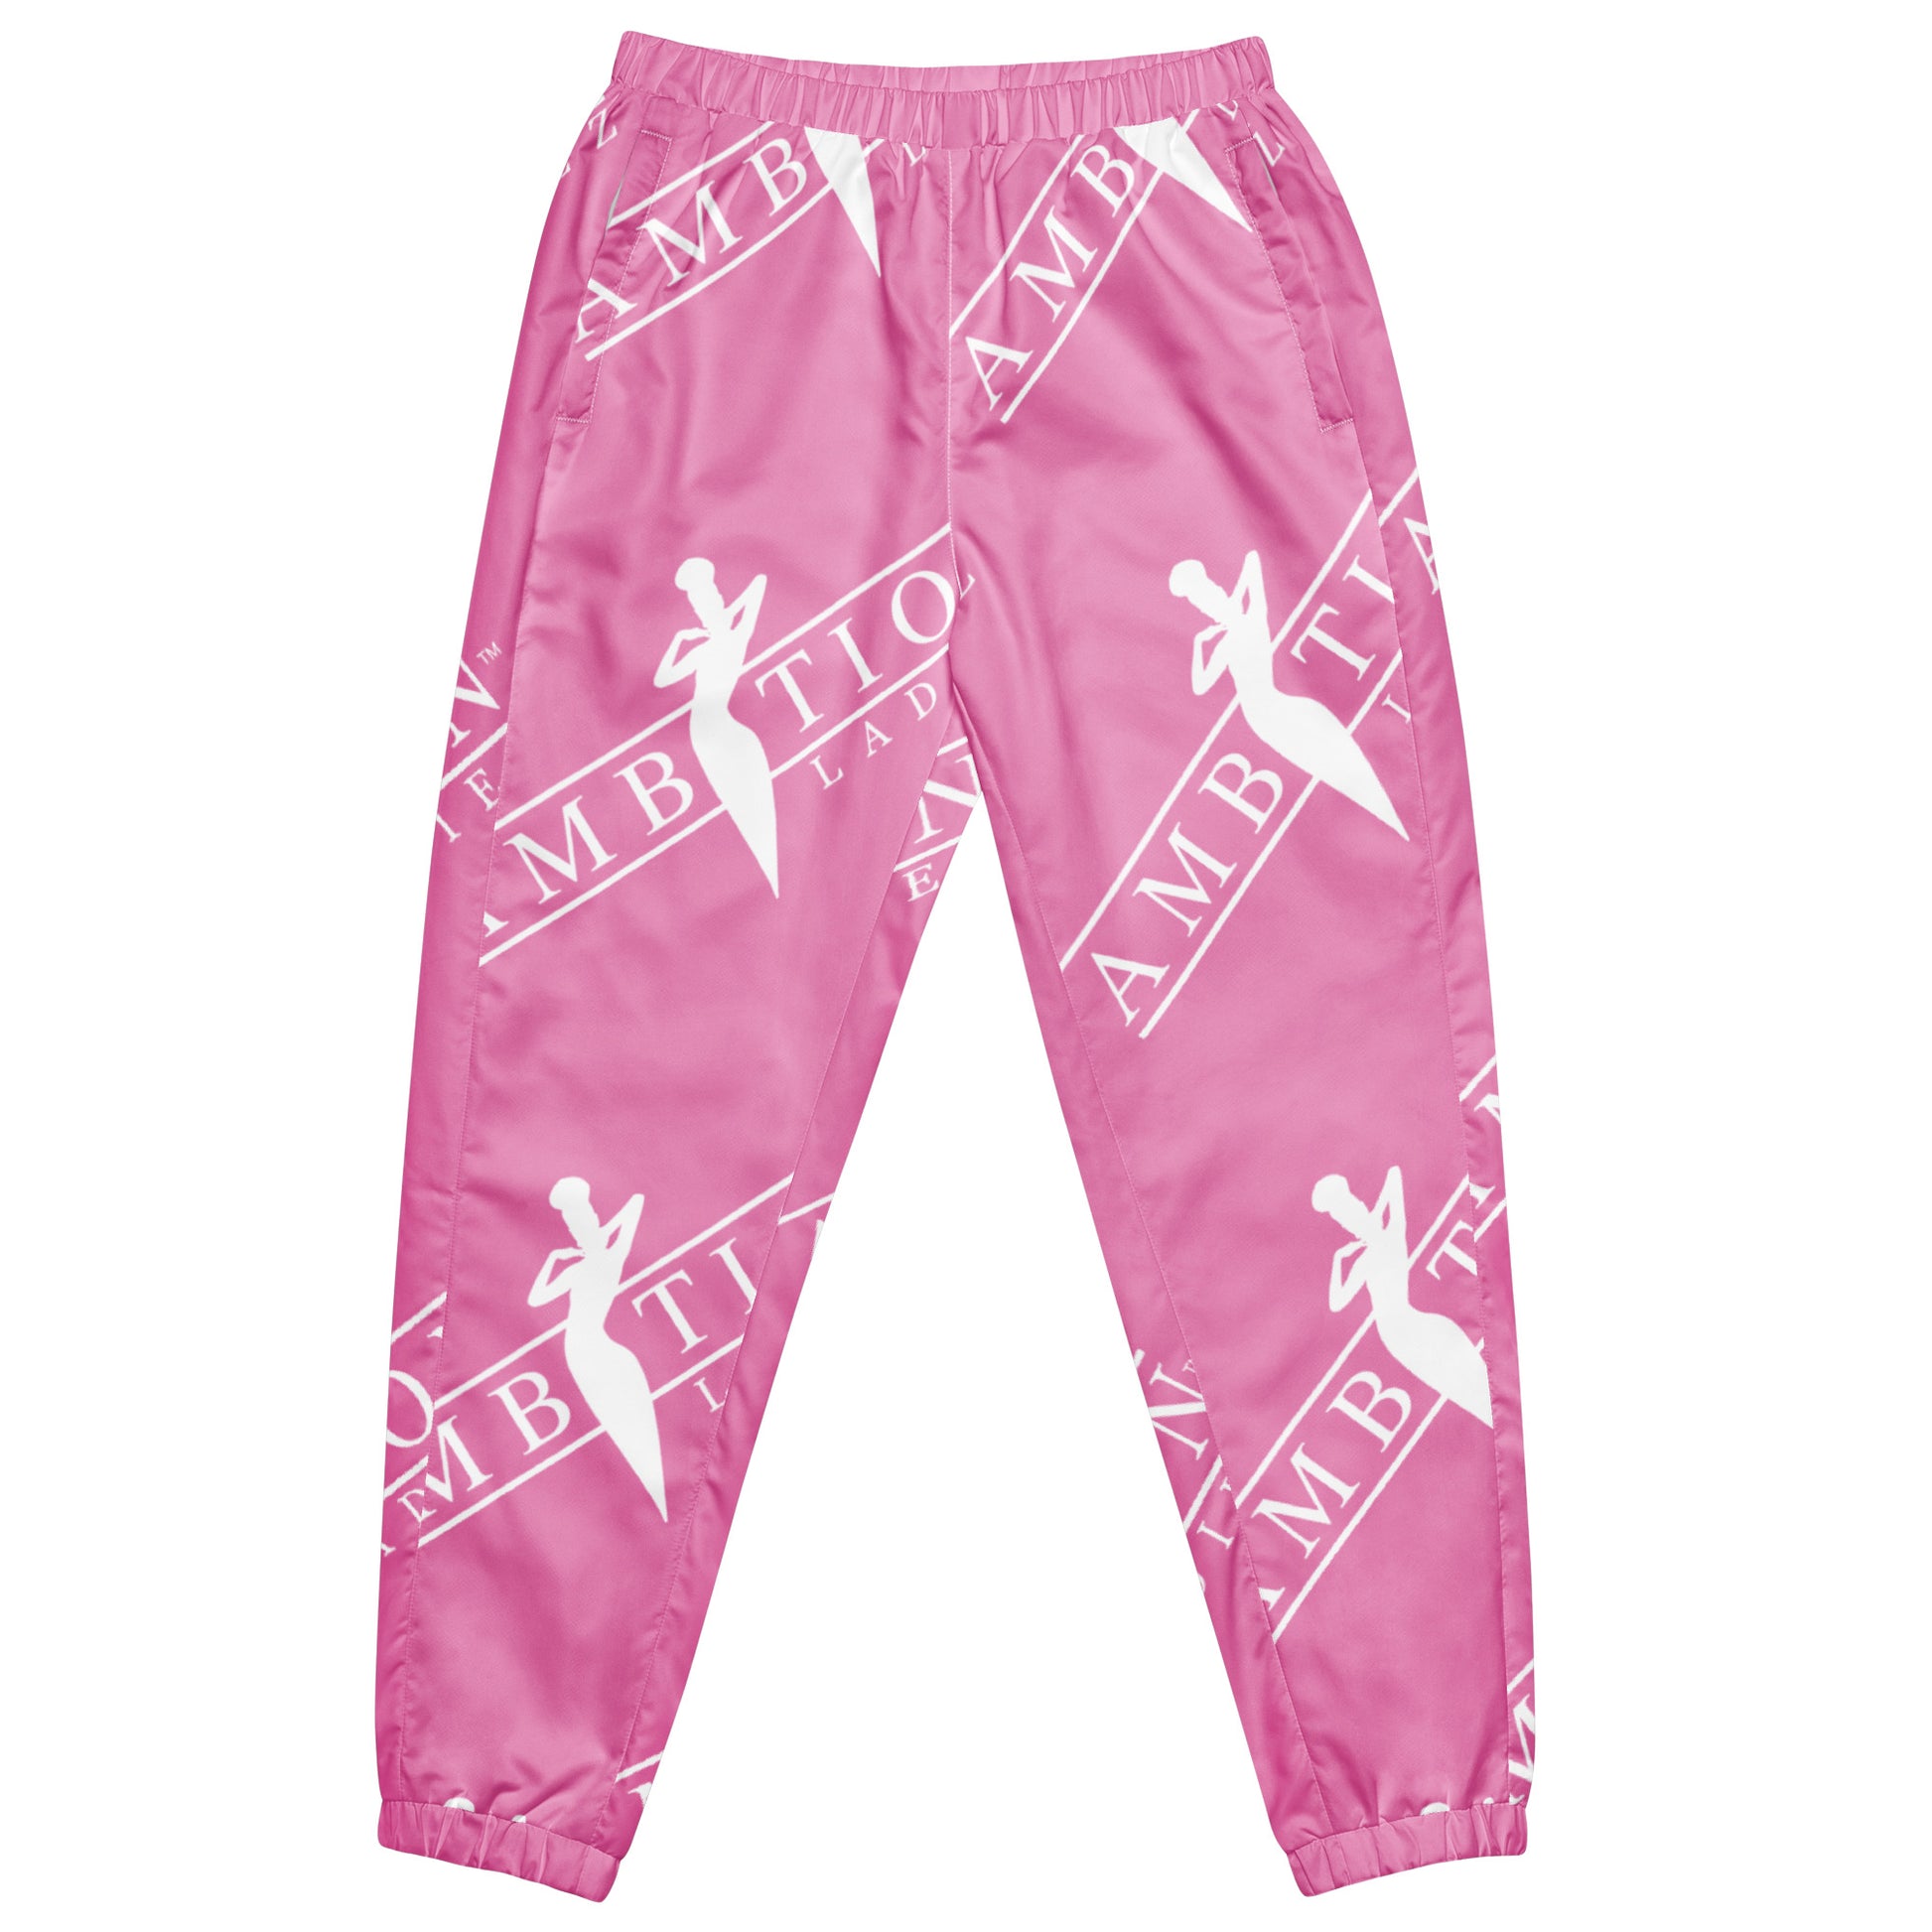 Unisex Pink Track Pants